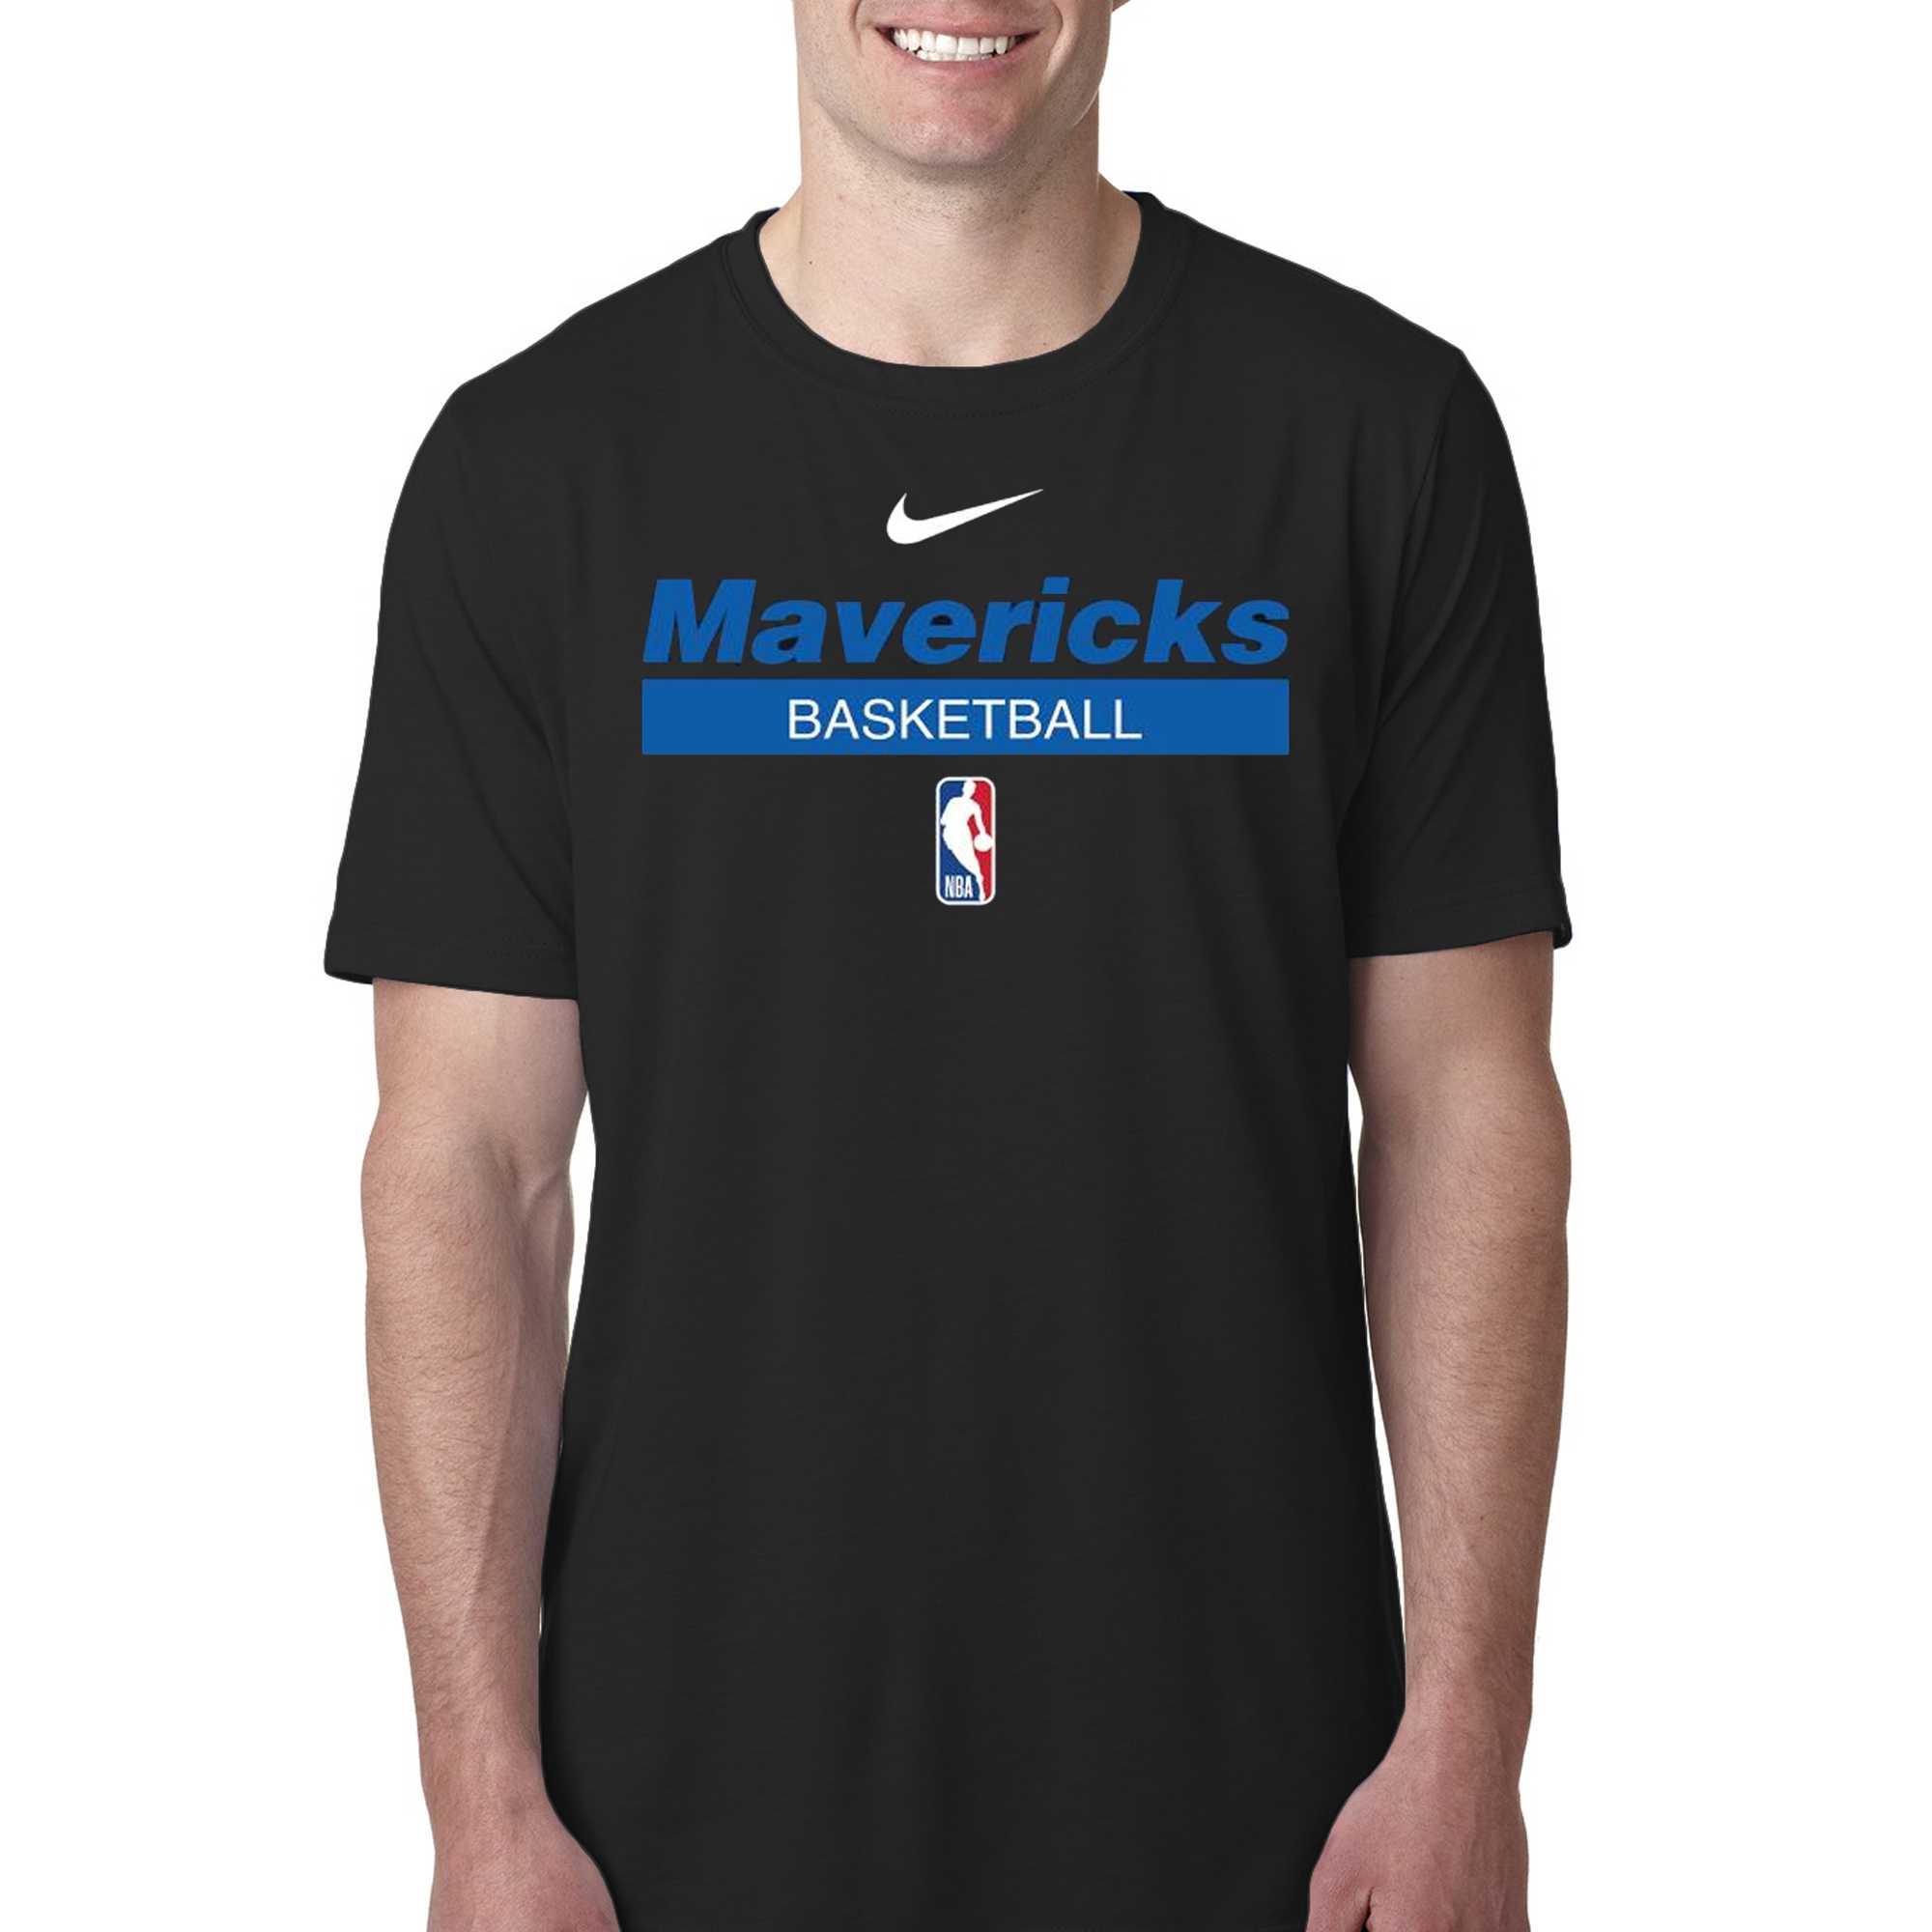 dallas mavericks throwback shirt